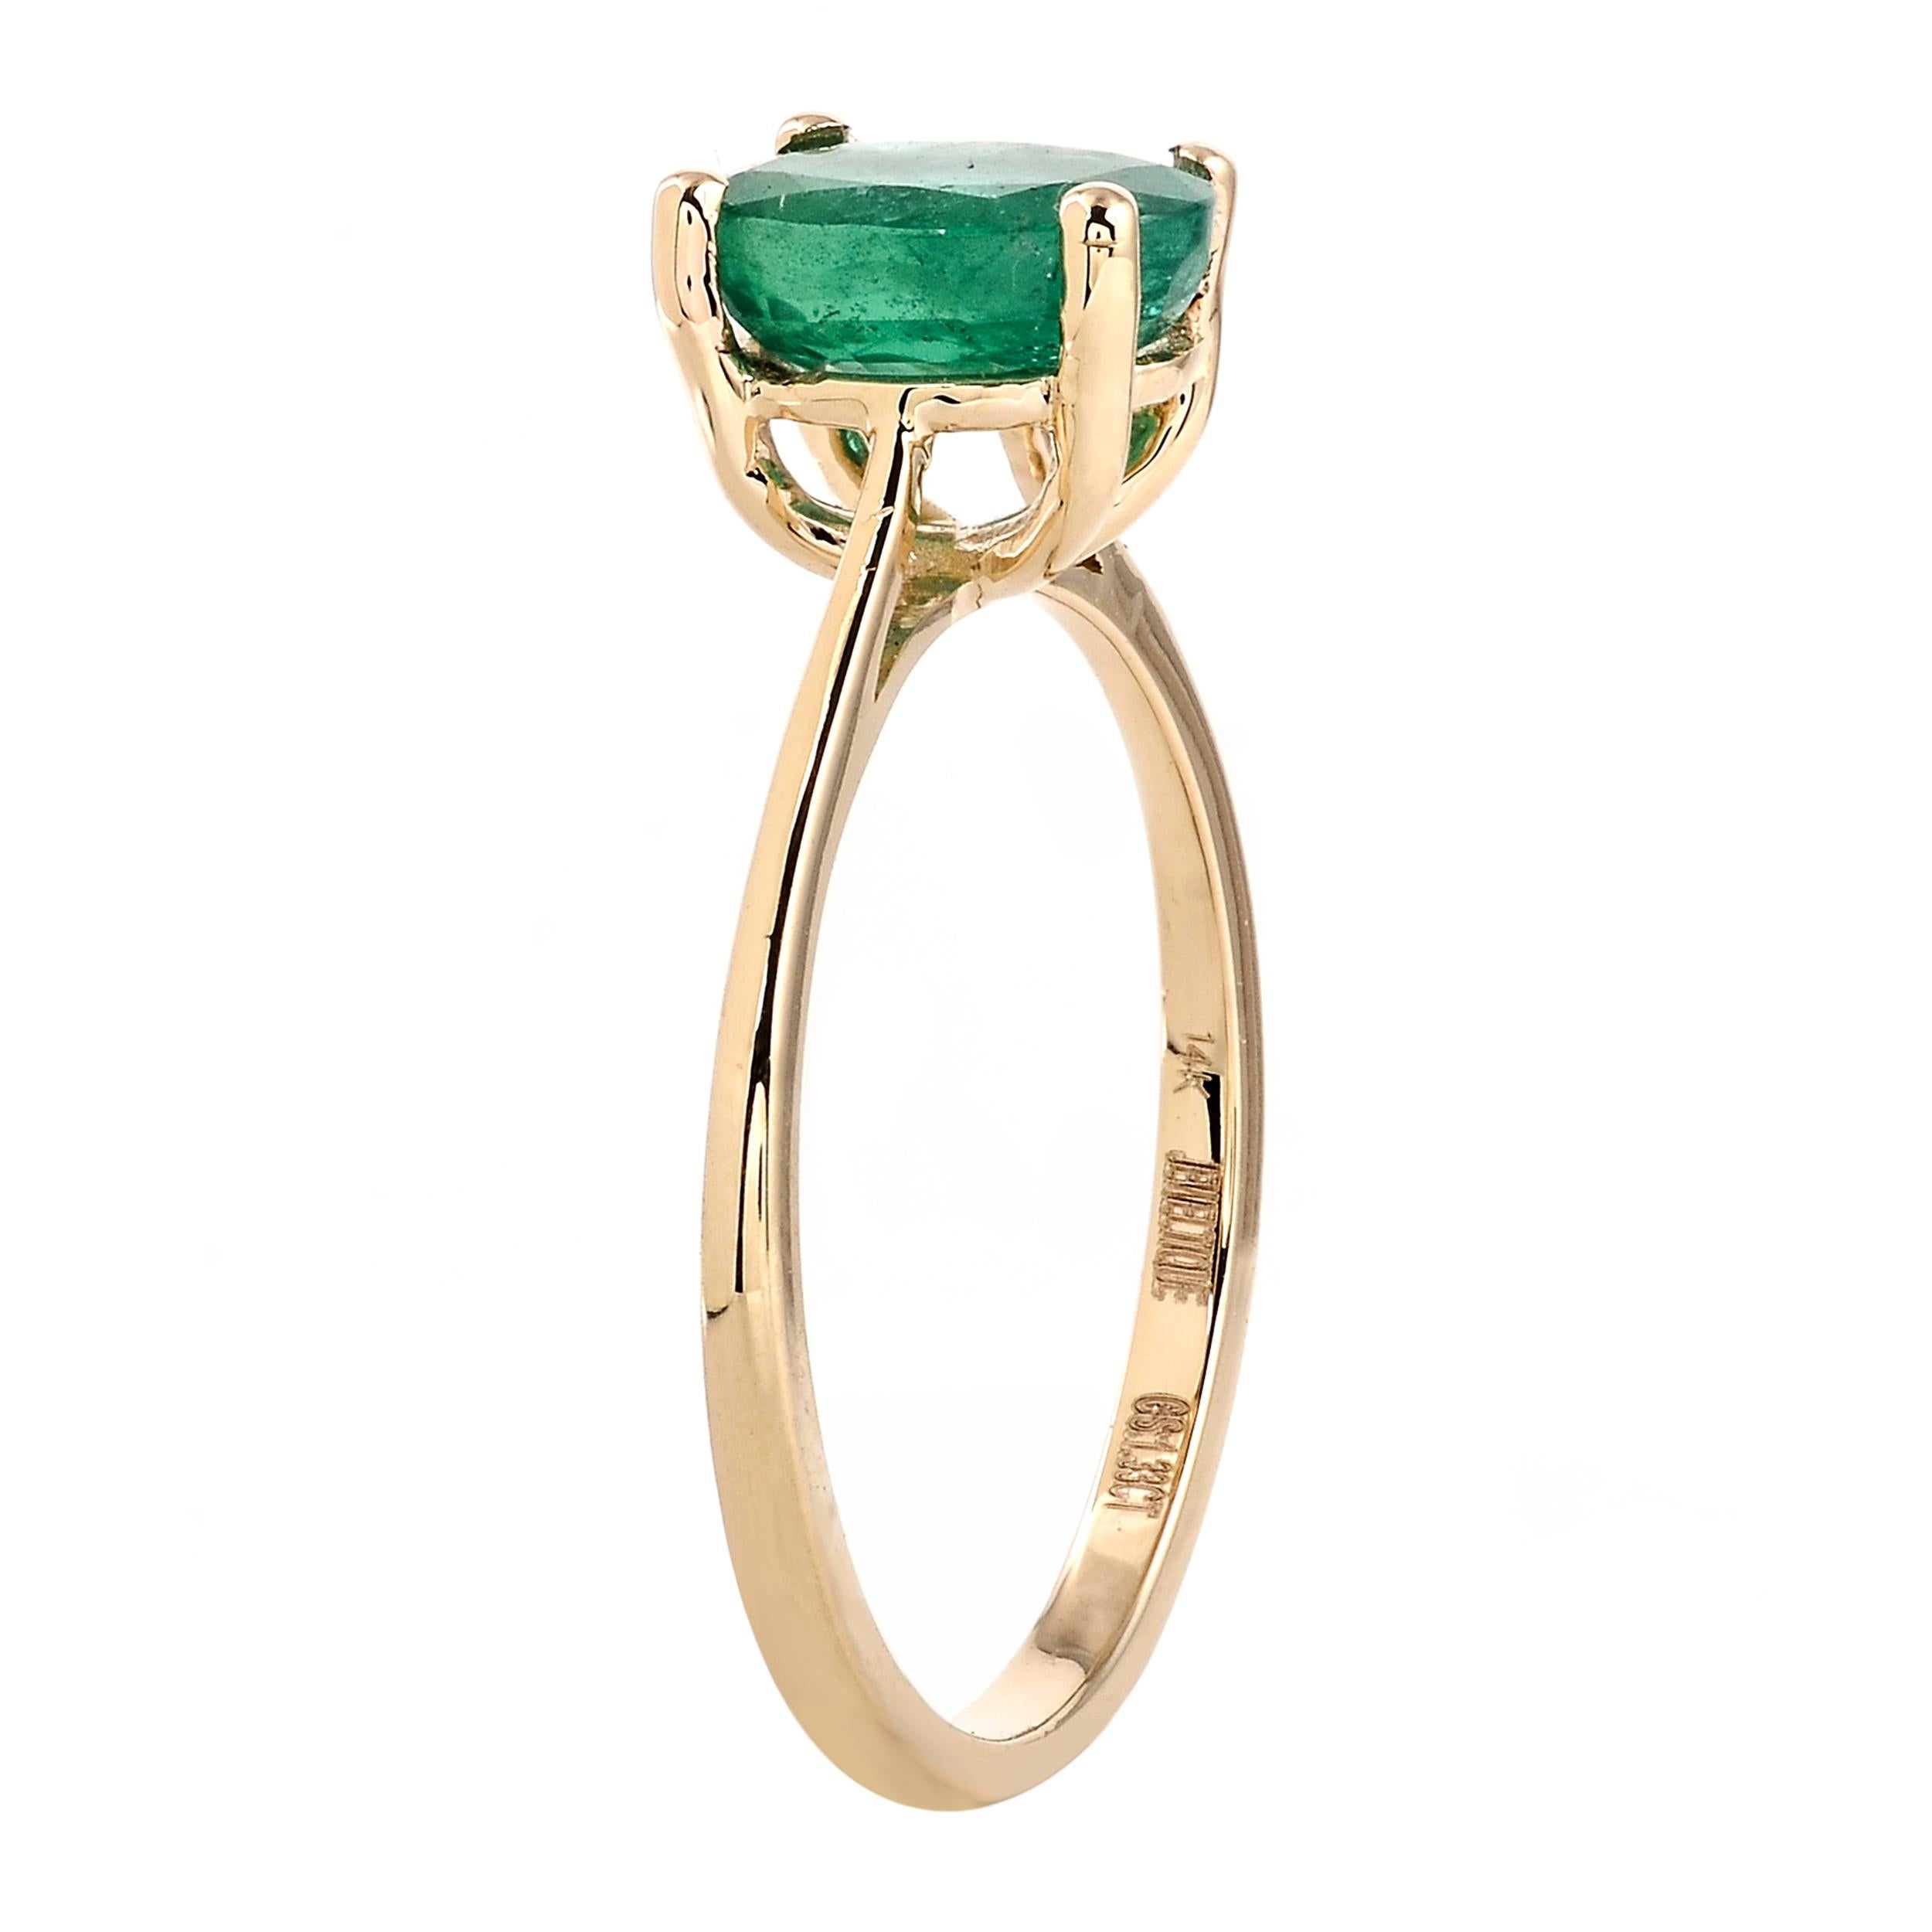 Taille émeraude Elegant 14K 1.33ct Emerald Cocktail Ring, Size 7 - Timeless & Elegant Jewelry en vente